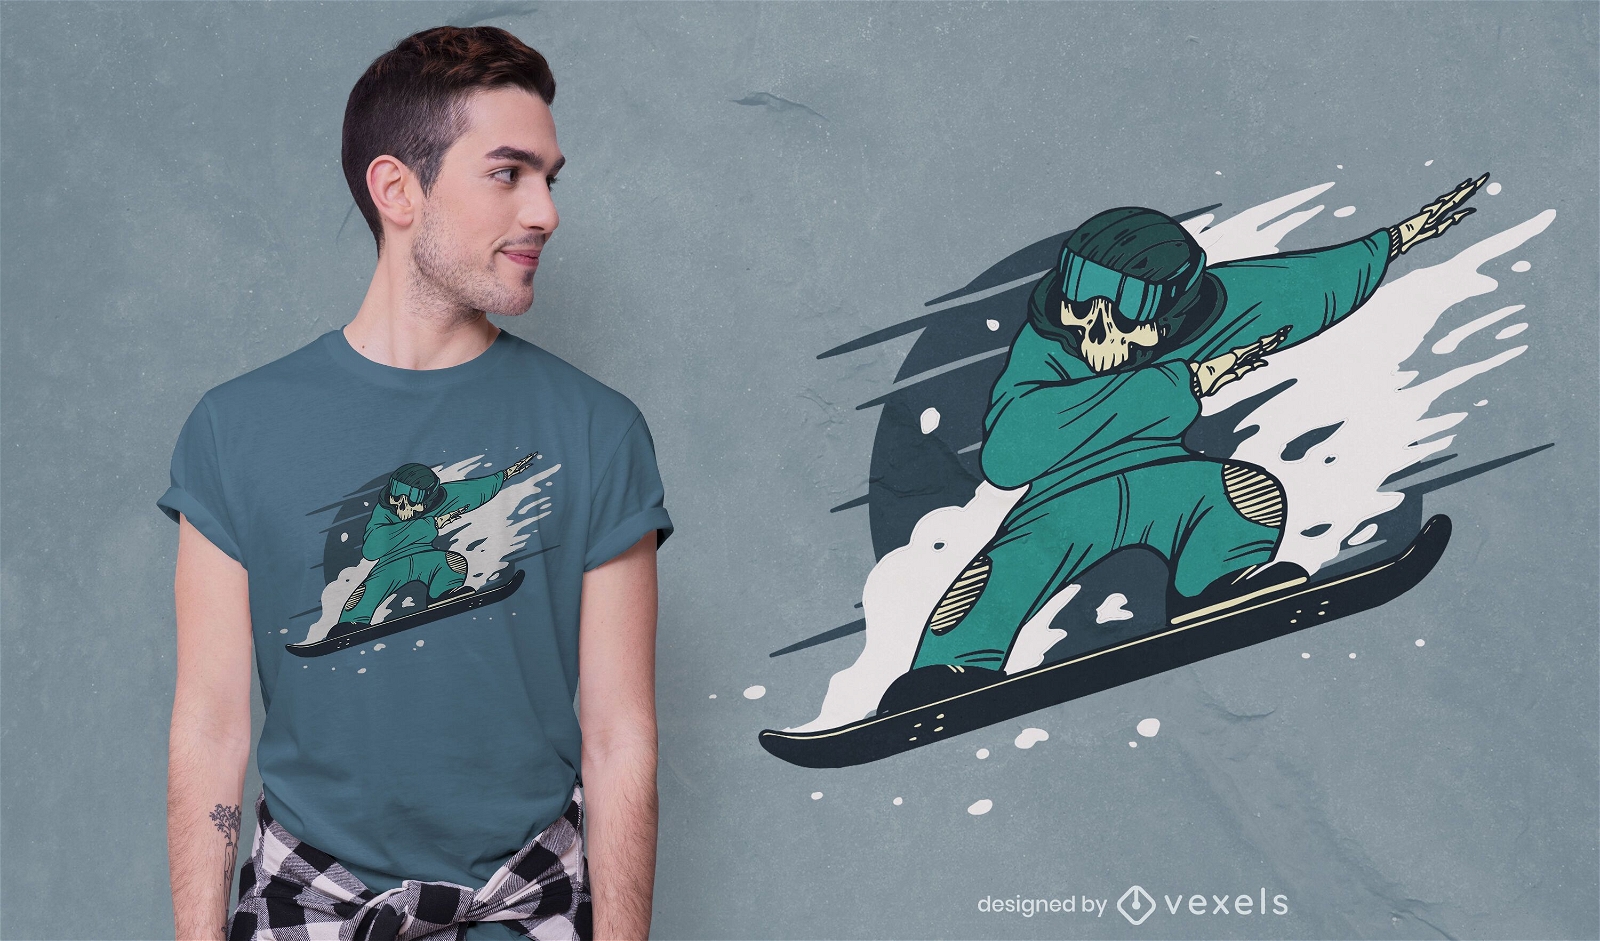 Snowboarding skeleton t-shirt design